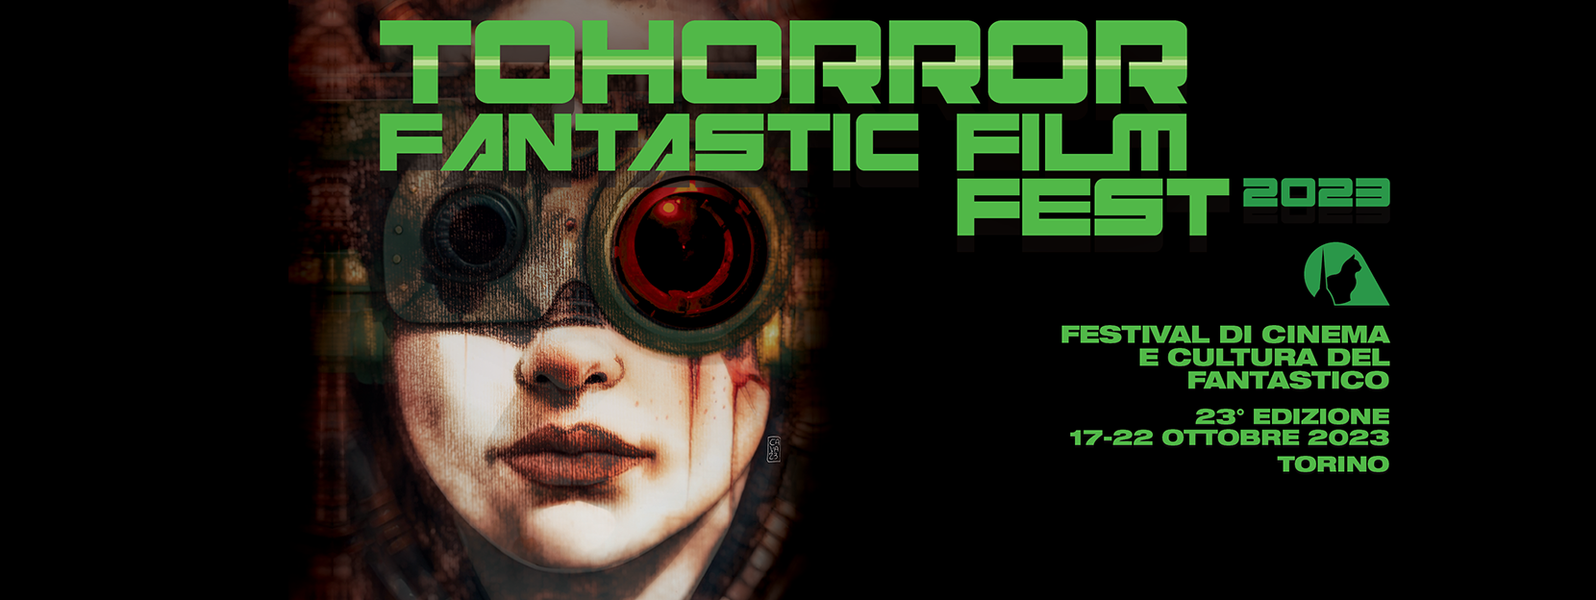 TOHorror Fantastic Film Fest